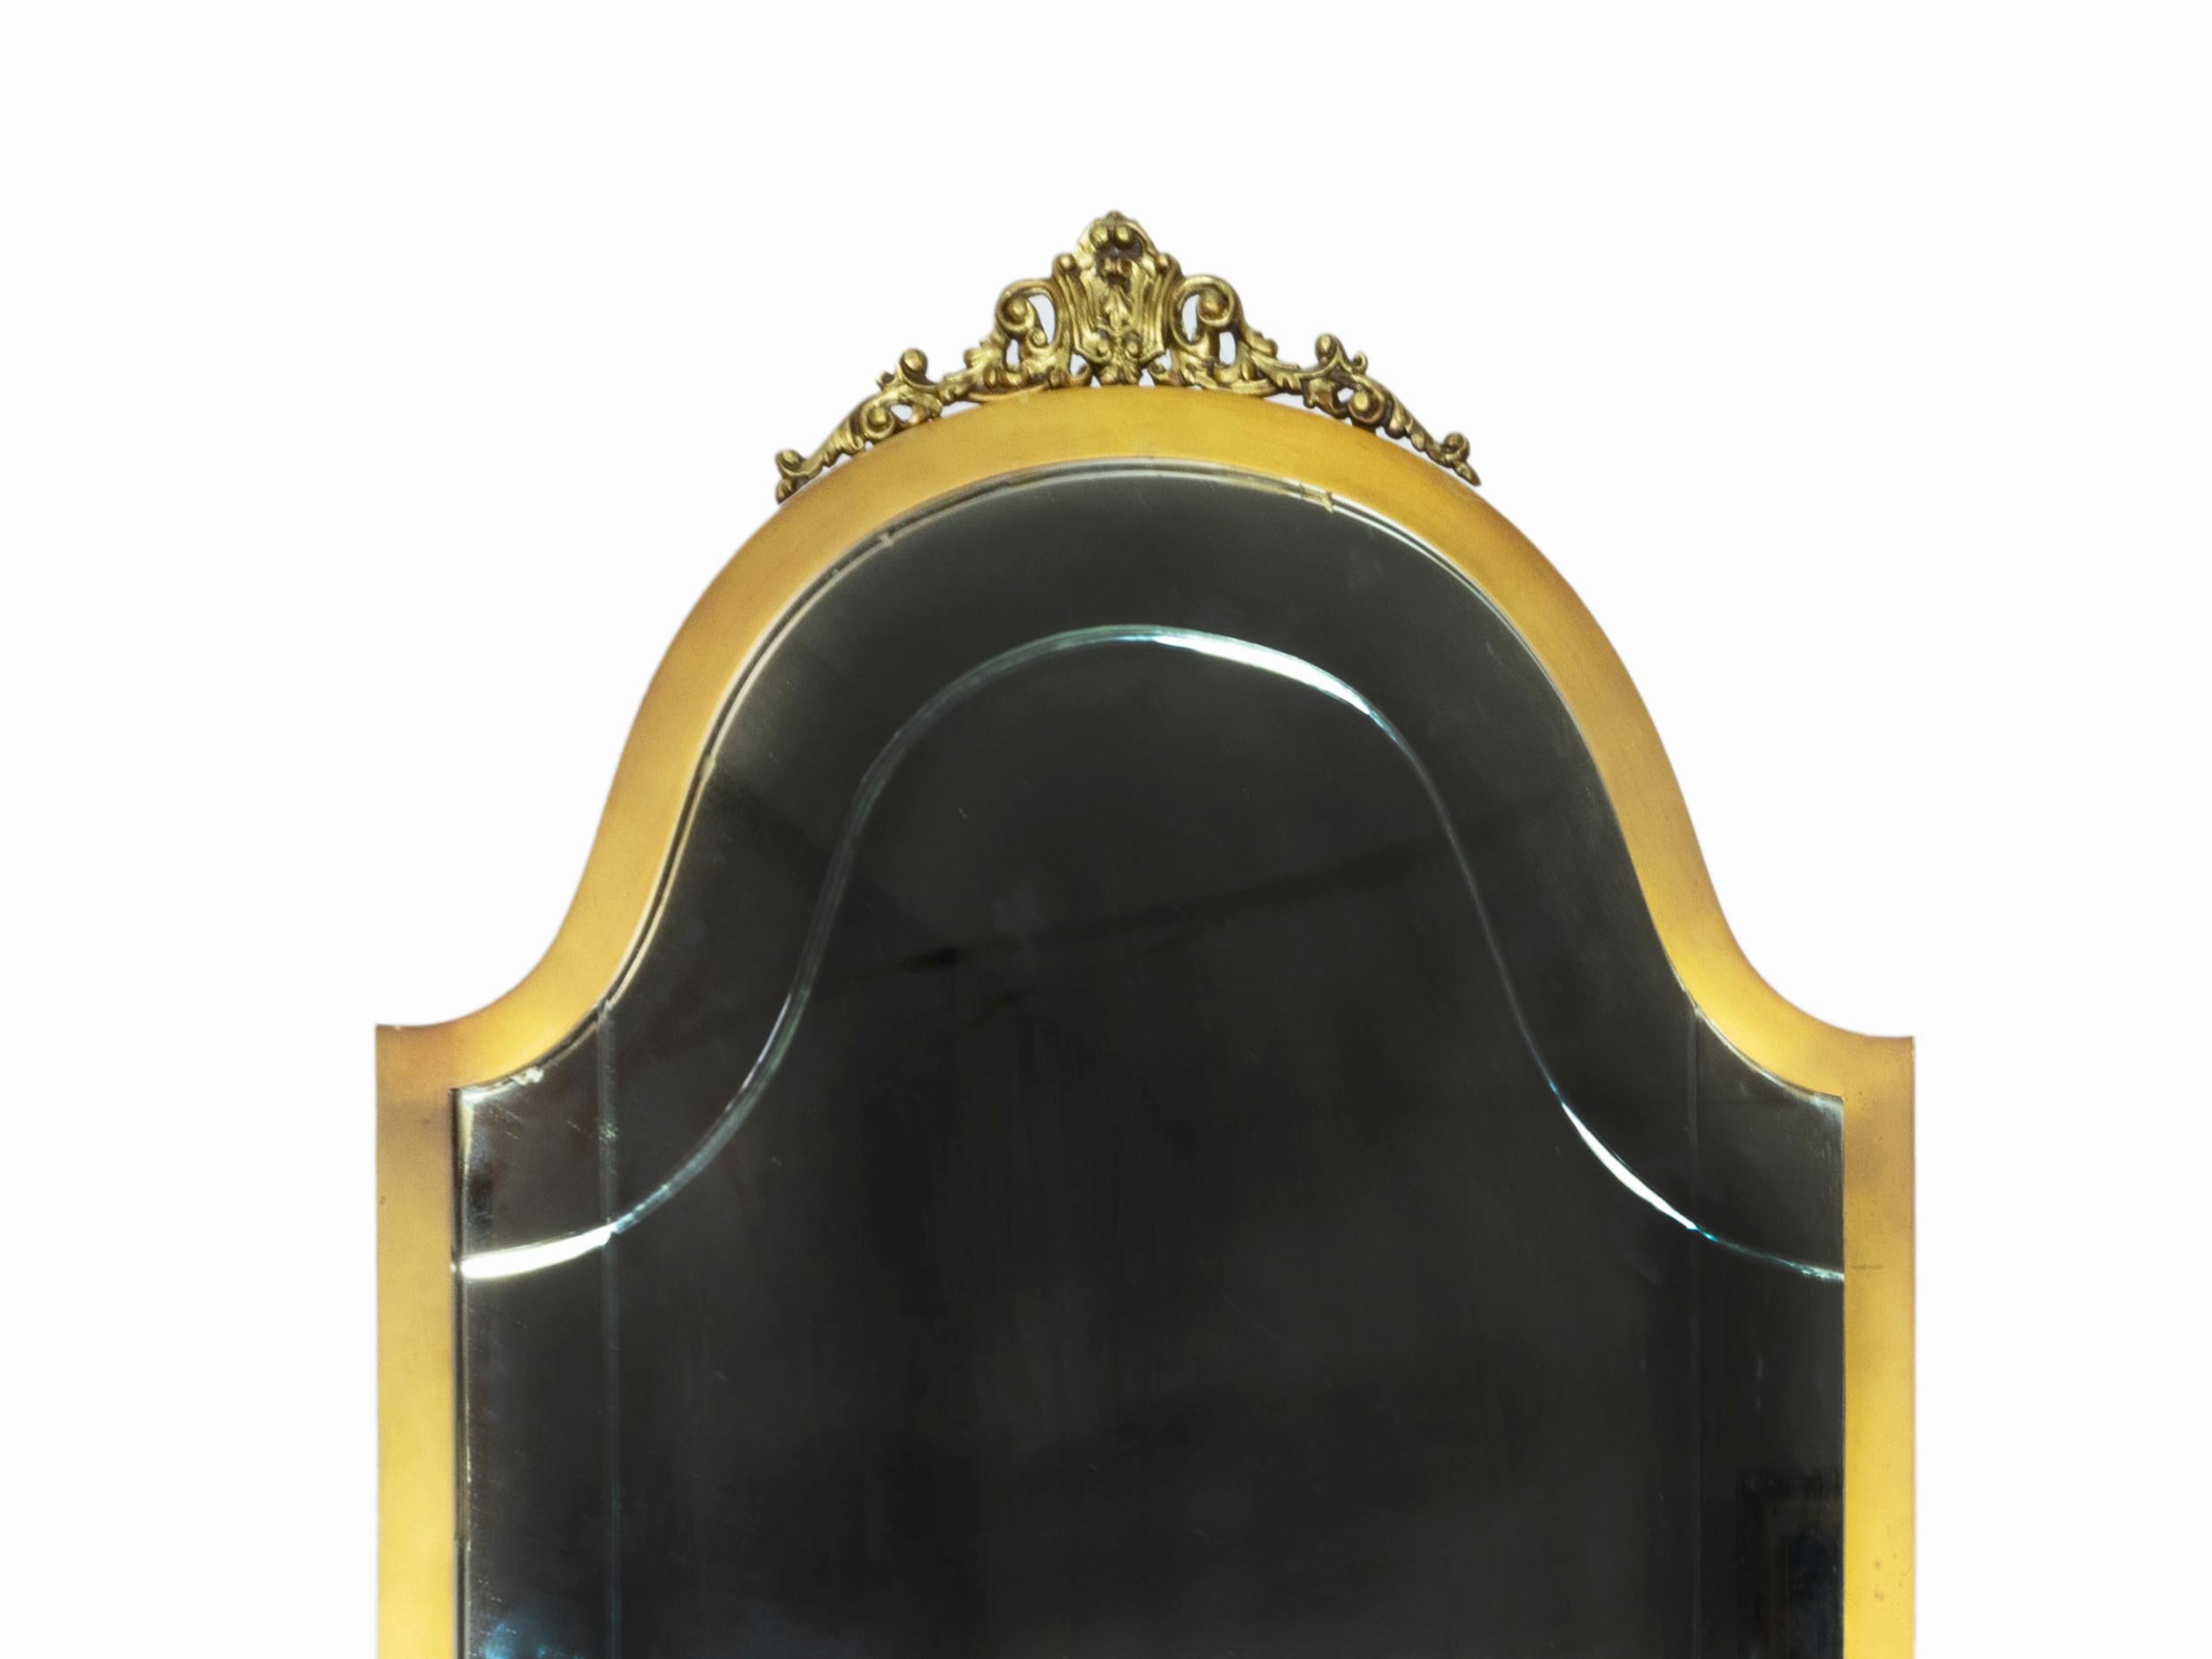 Golden Mirror in a Modern twist to Louis XV Style.
